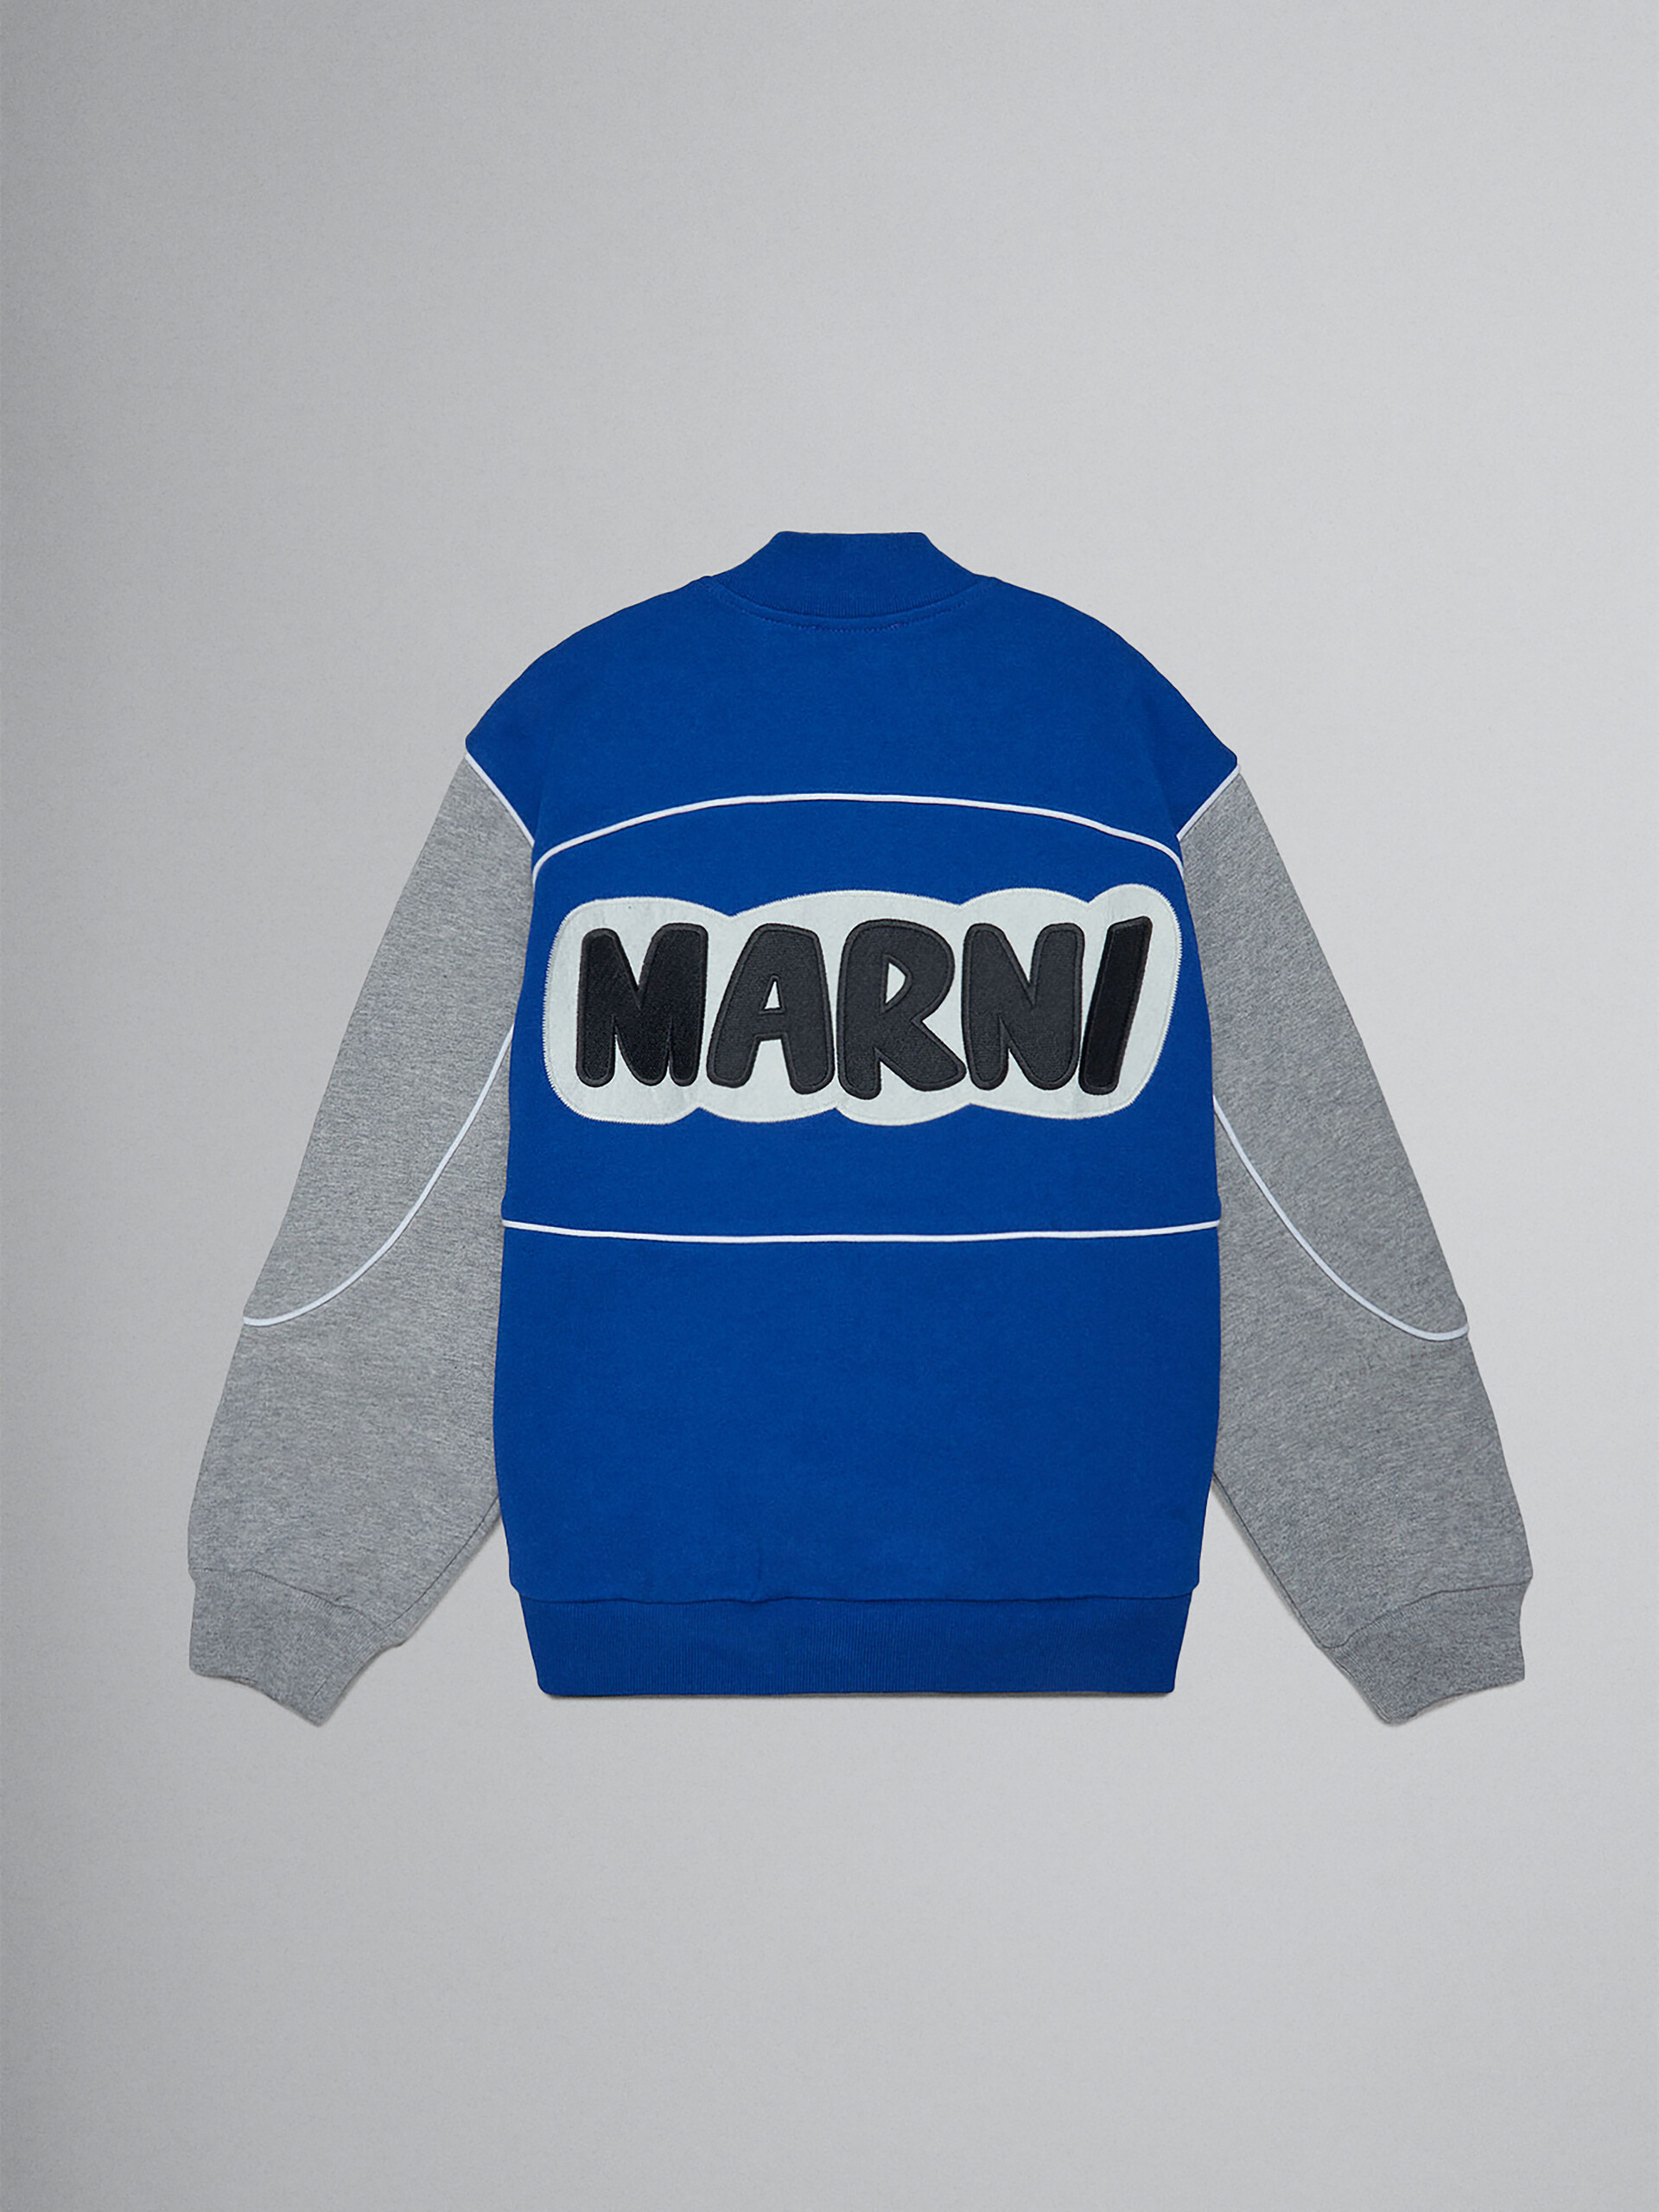 Blue fleece bomber jacket with logo on the back - Sweaters - Image 2